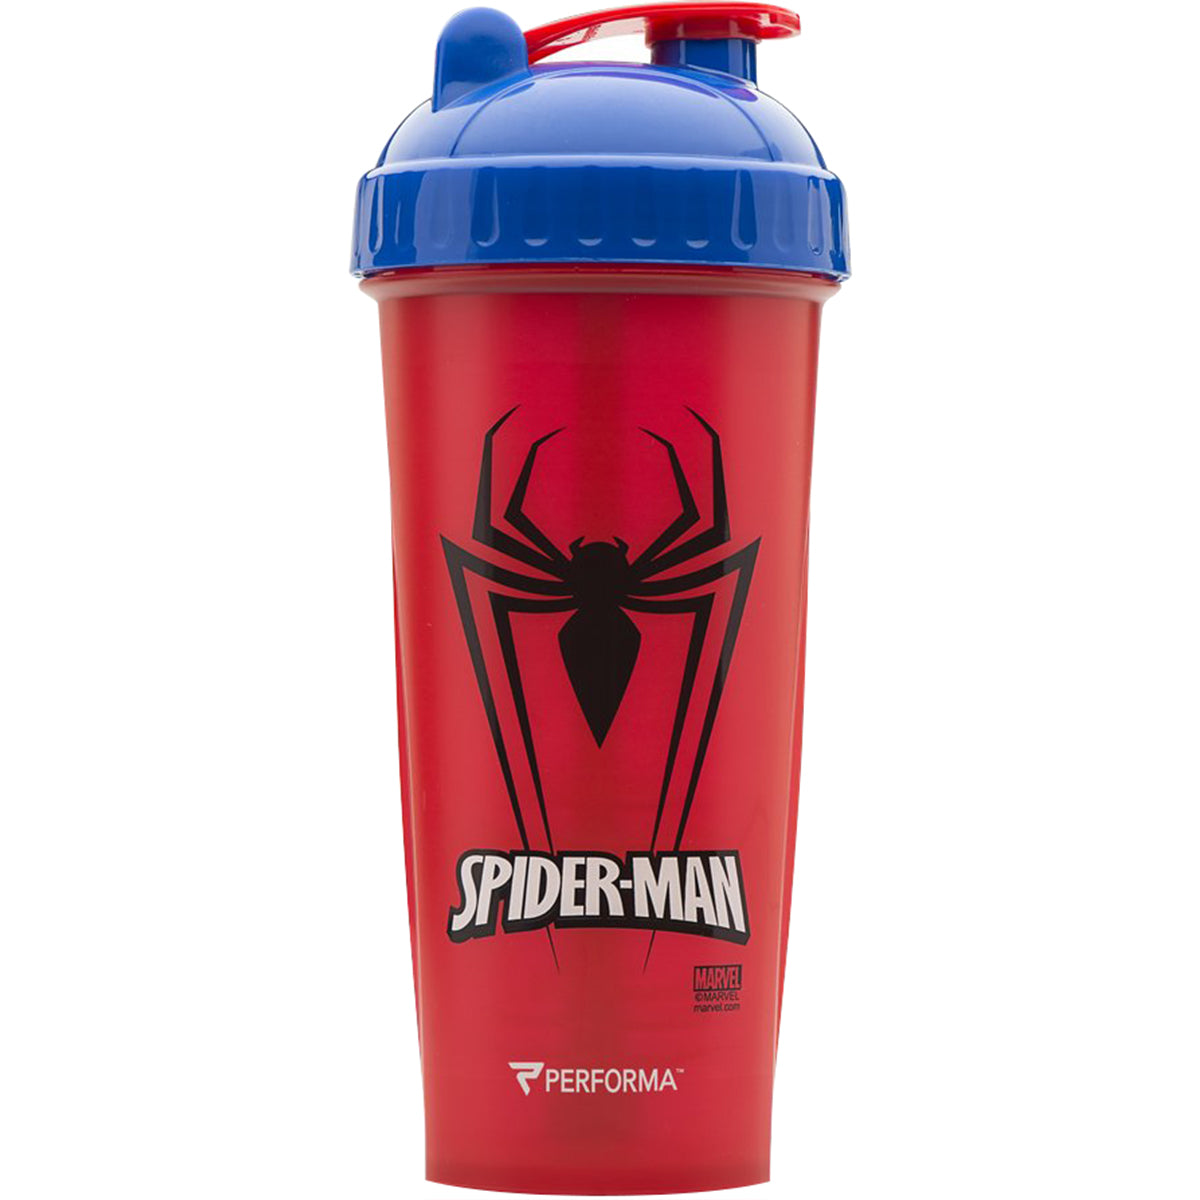 Performa PerfectShaker 28 oz. Hero Shaker Cup - Spider-Man PerfectShaker